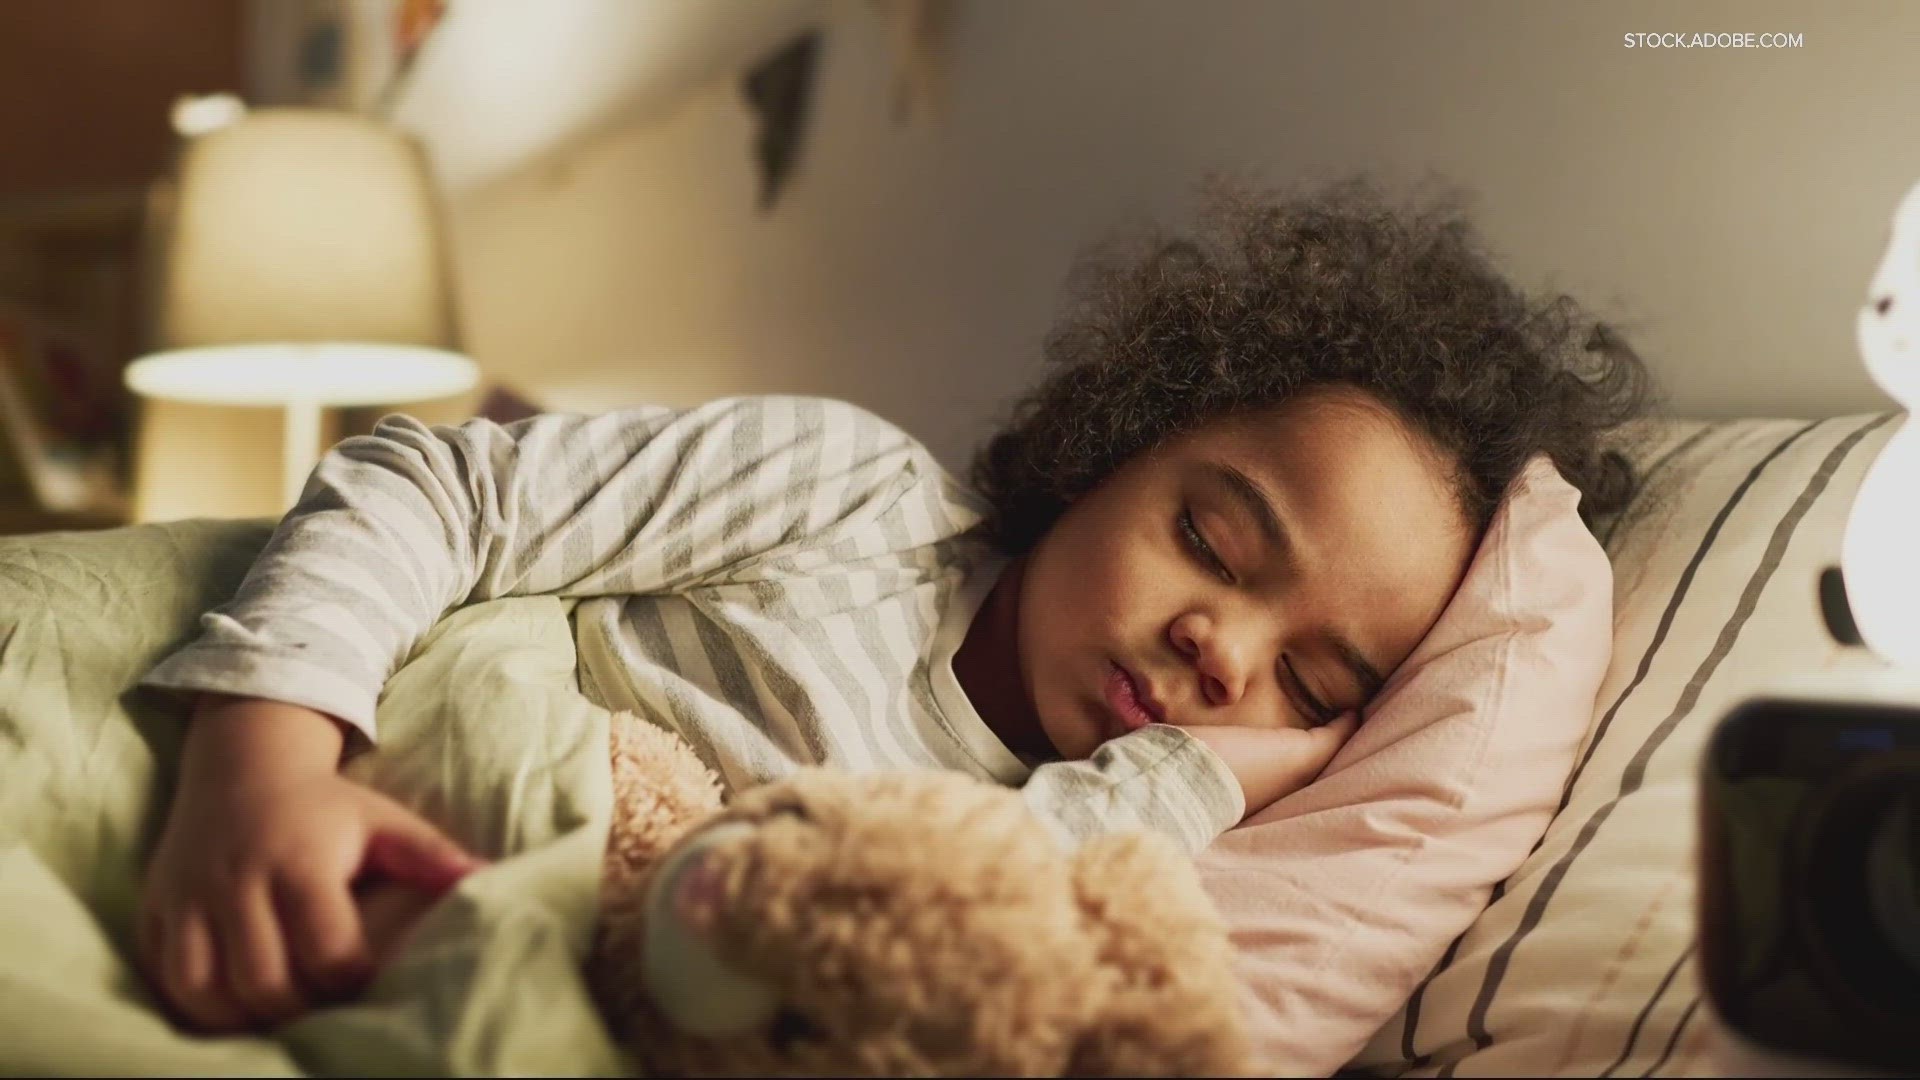 Your child's sleep affects their brain